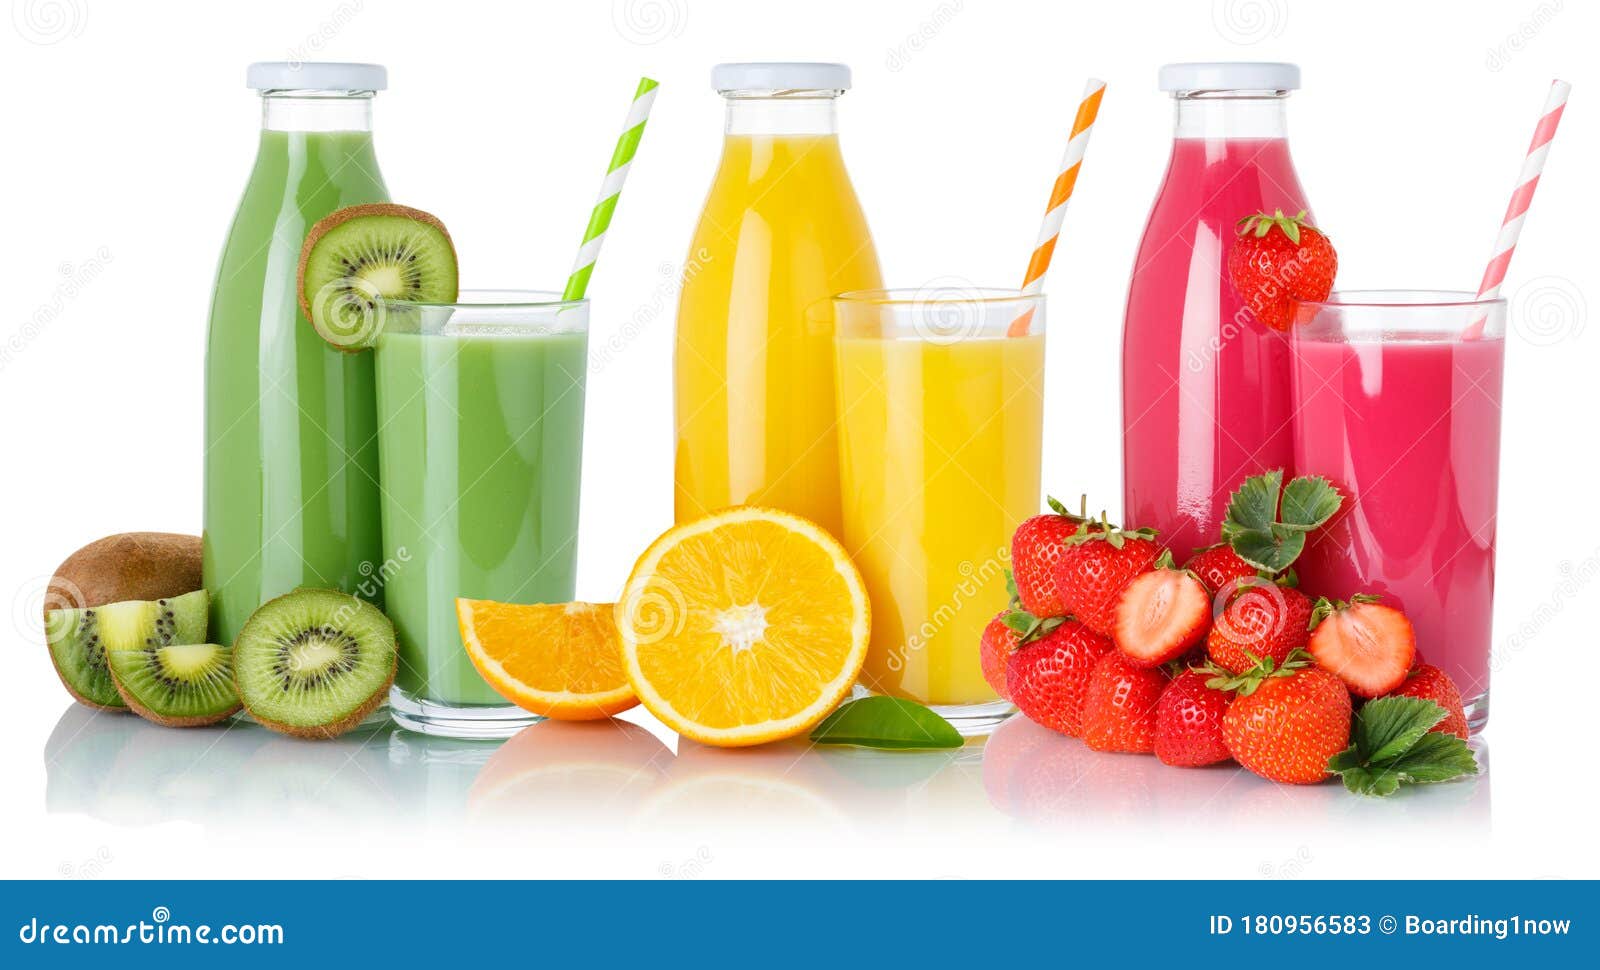 Fruit Juice Drink Green Smoothies Orange Juices Glass and Bottle Isolated  on White Stock Image - Image of smoothies, fresh: 180956583